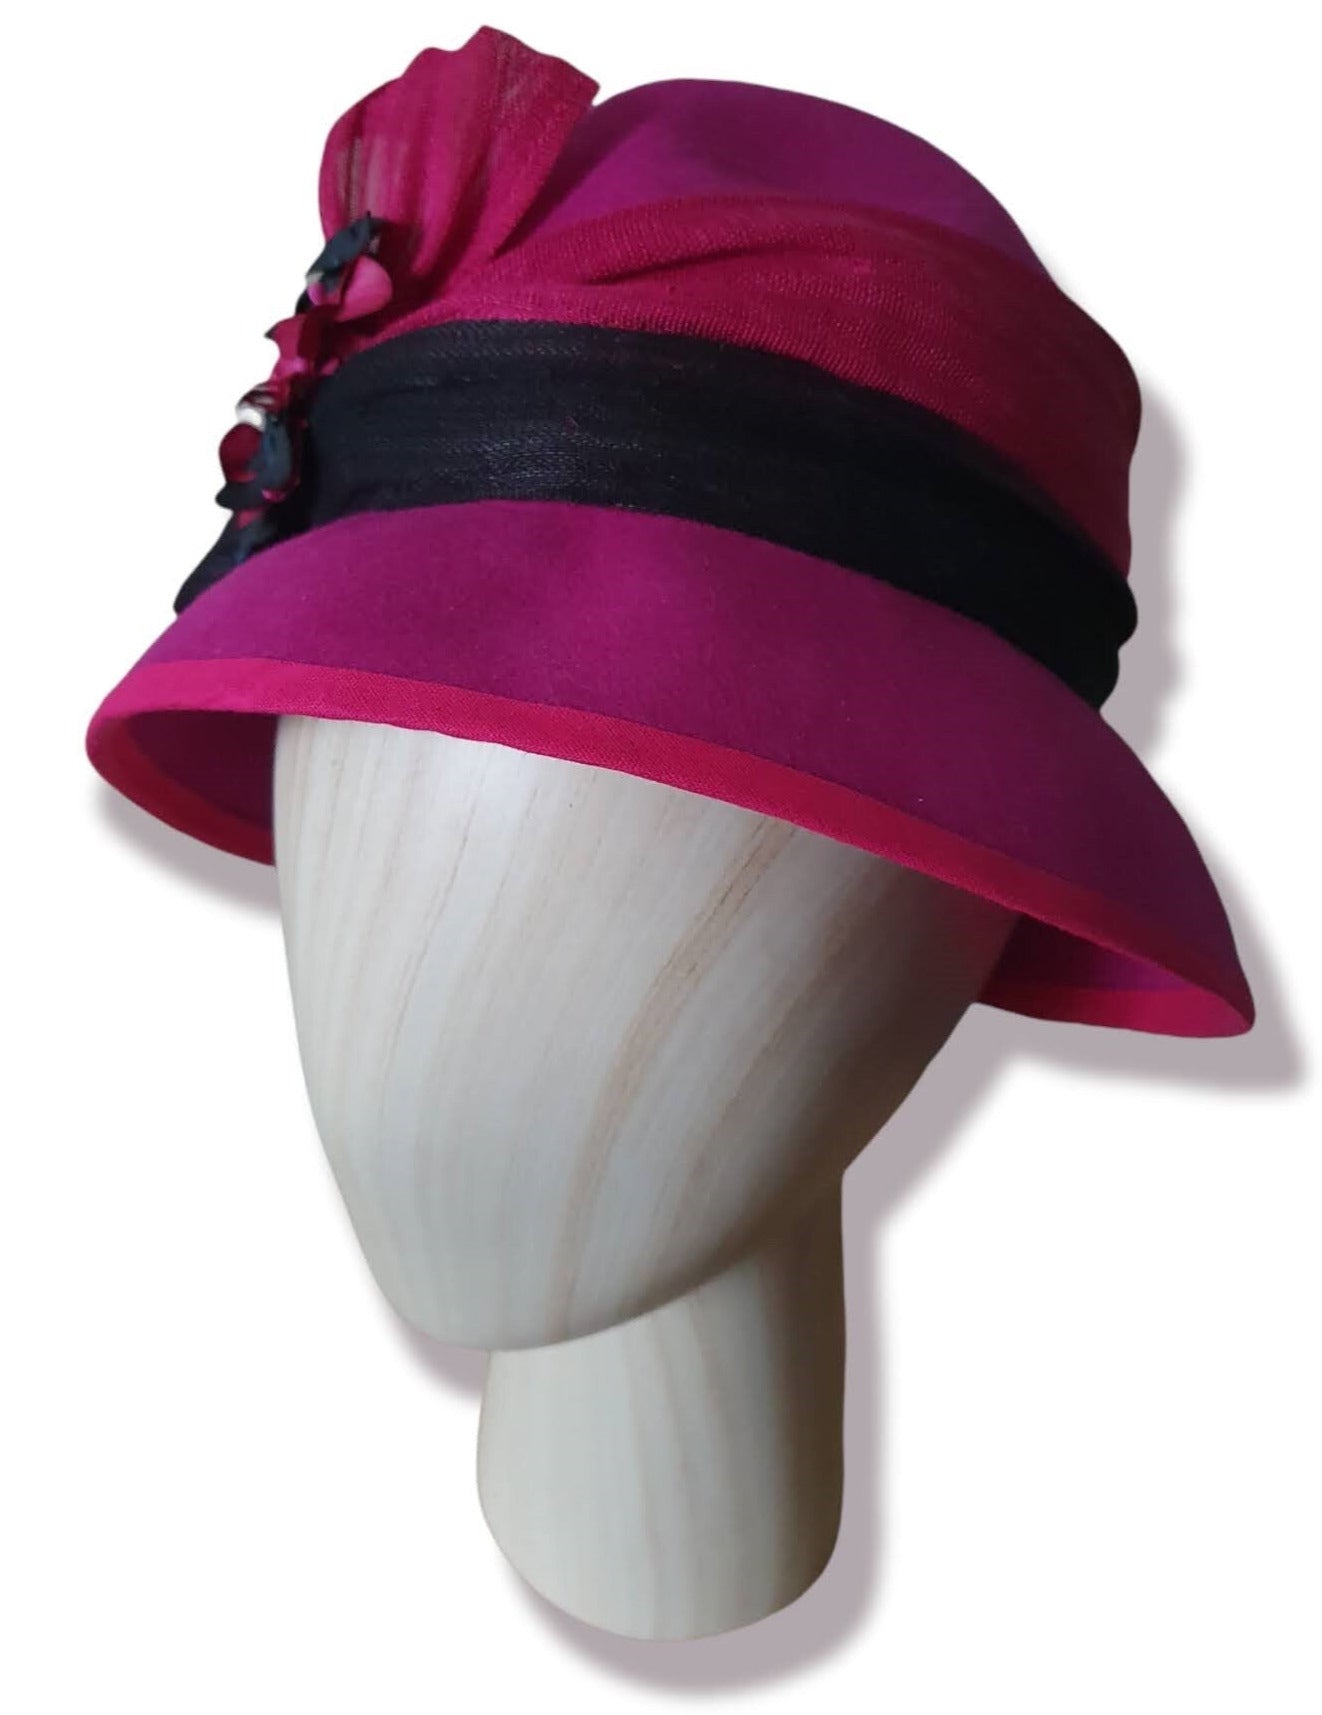 Elegant women's hat felt hat fuchsia with black - stylish fascinator, felt hat, headpiece, for all events cloche hat